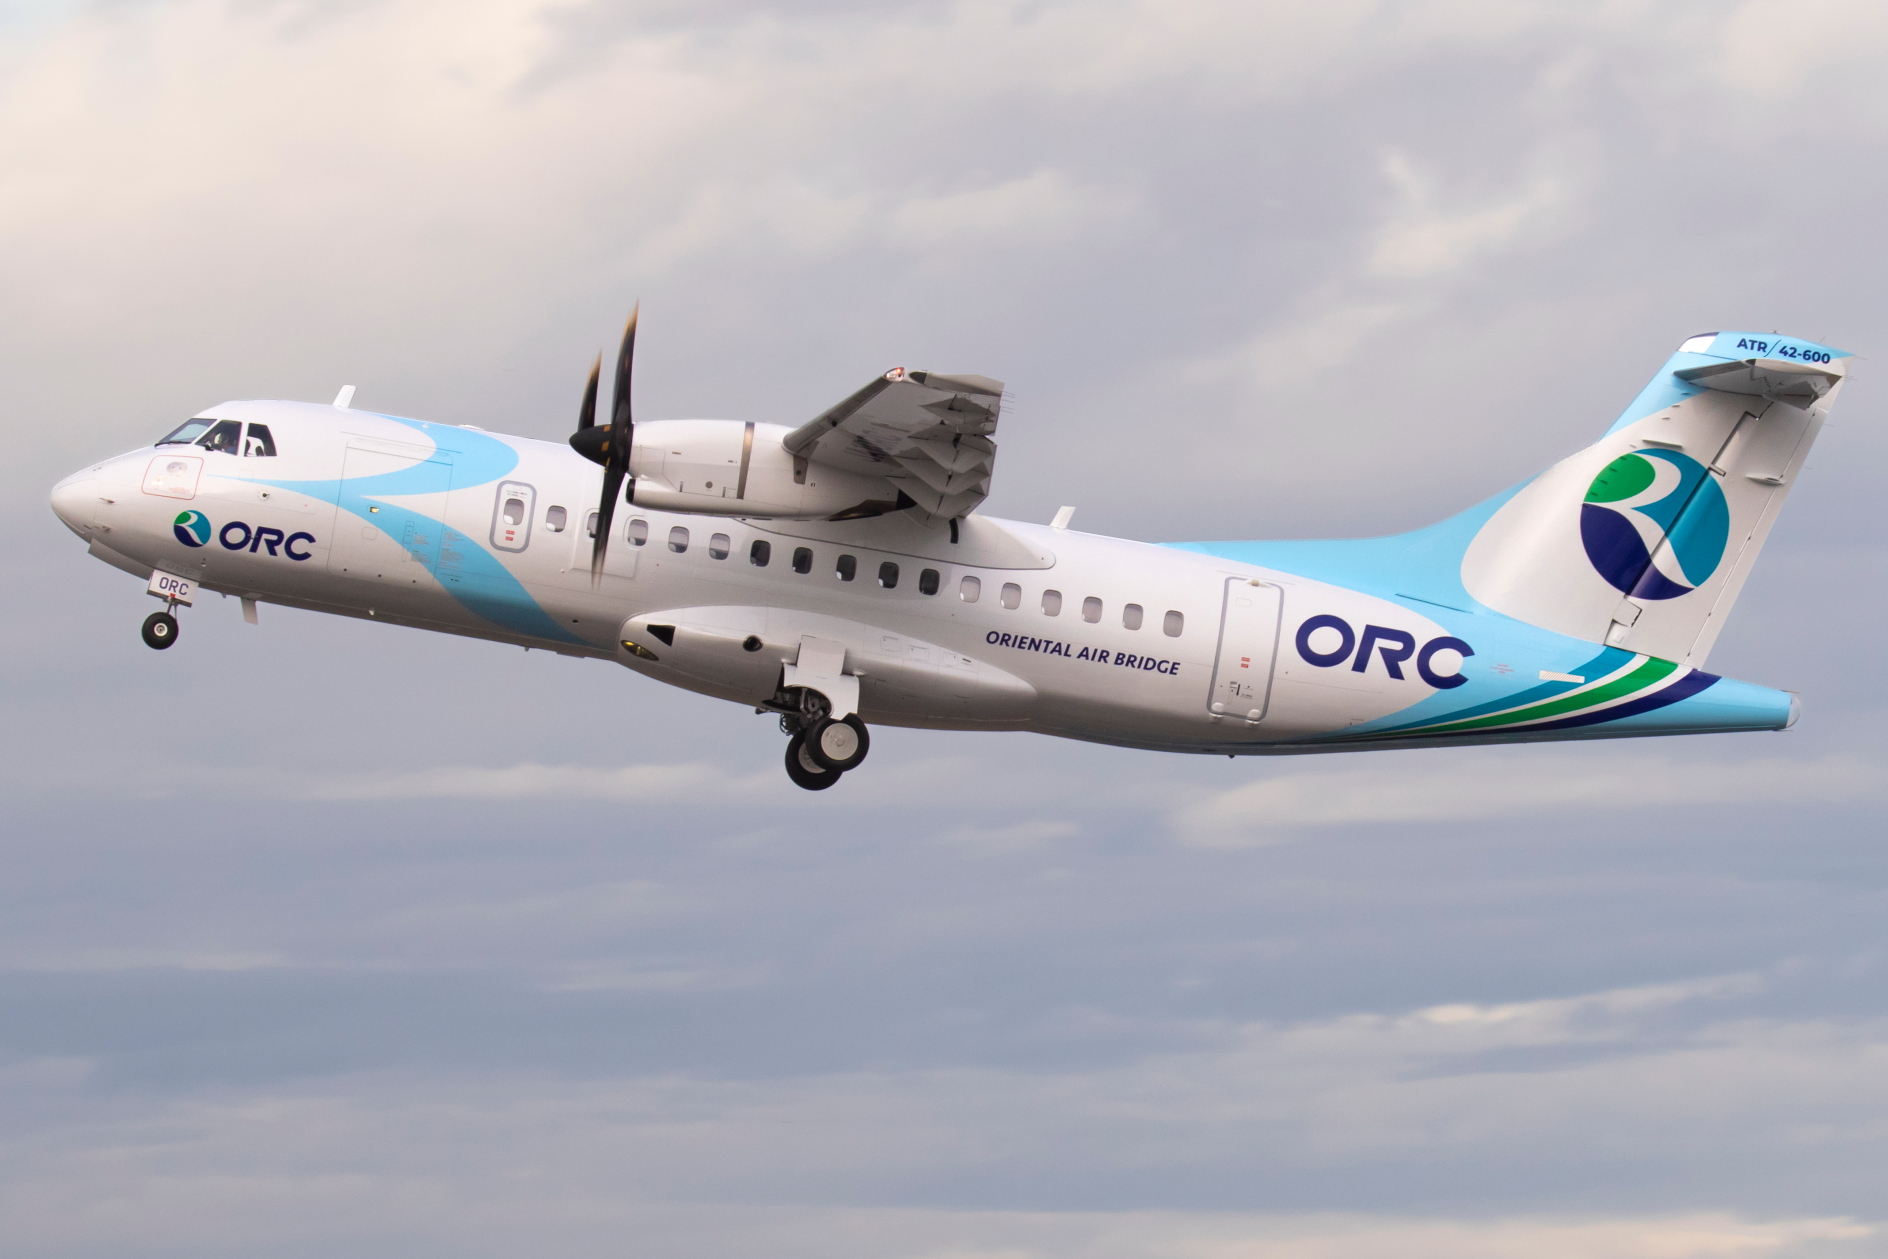 ORC (Oriental Air Bridge) ATR 42-600. Click to enlarge.